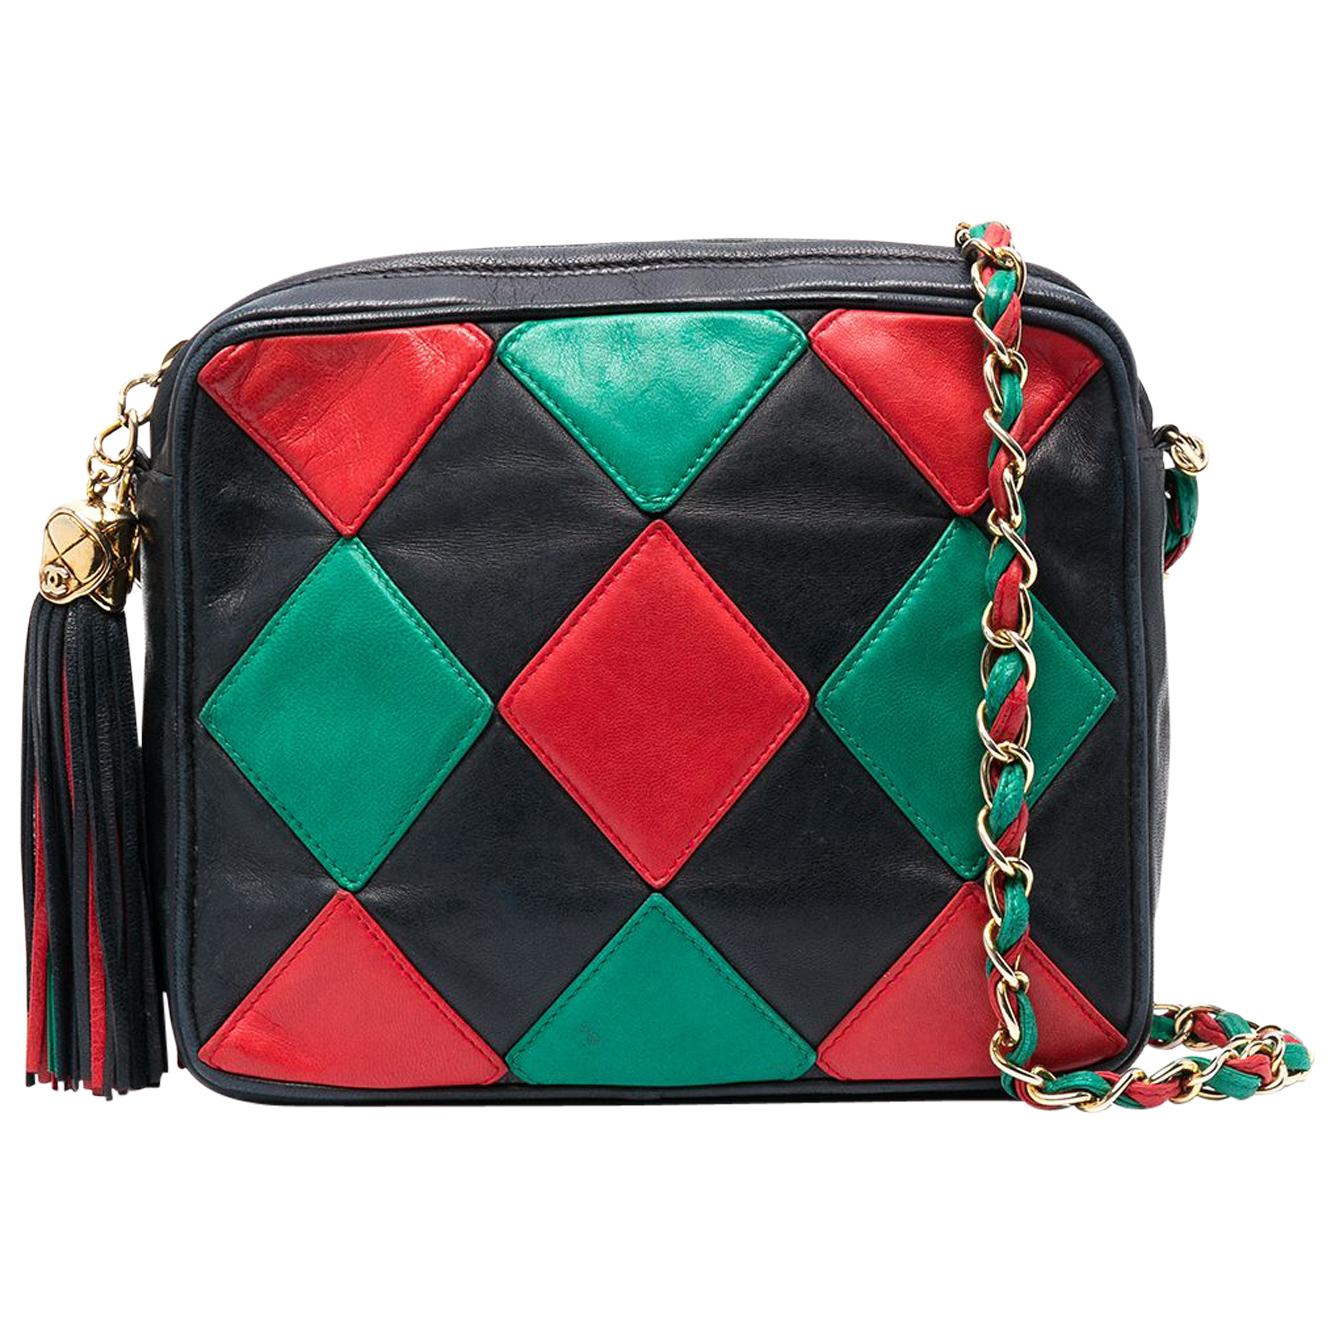 Chanel Argyle Patchwork Leather Handbag